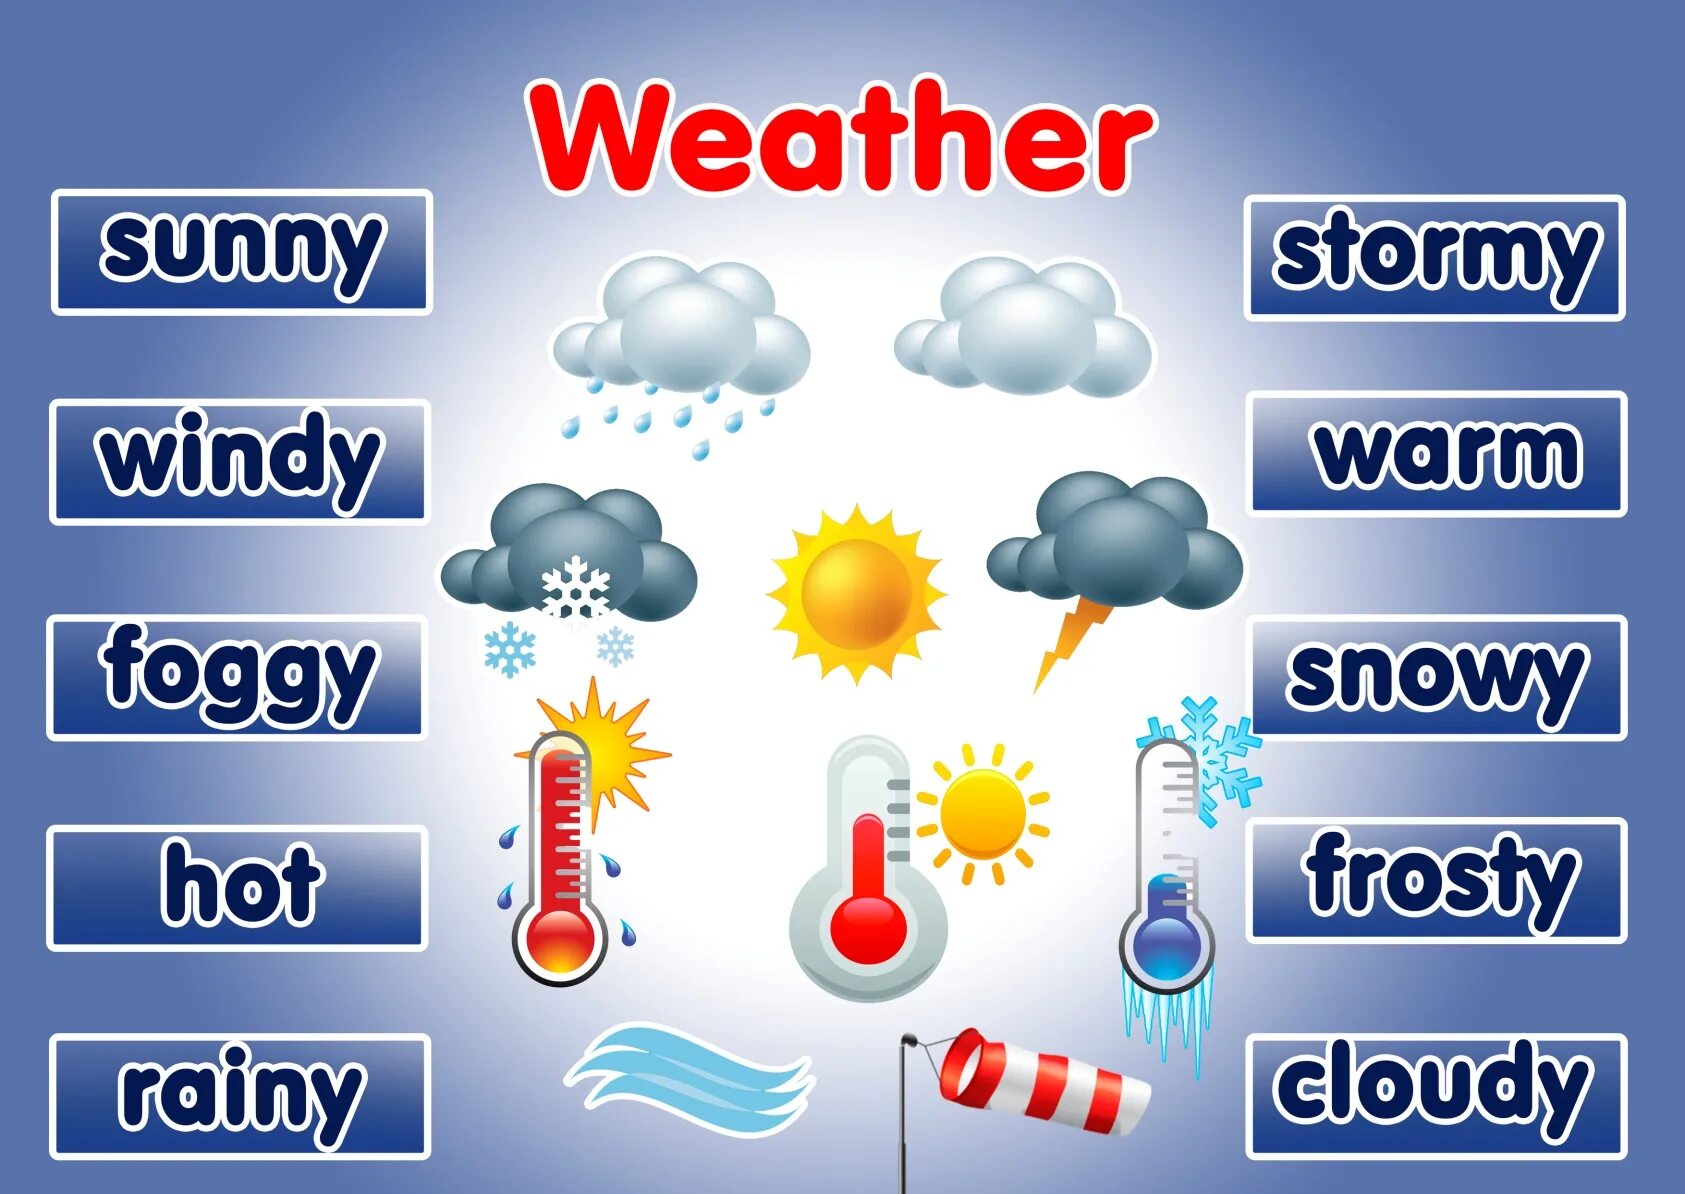 Схема взаимосвязи элементов погоды. Взаимосвязь погодных элементов. Взаимосвязь между элементами погоды.